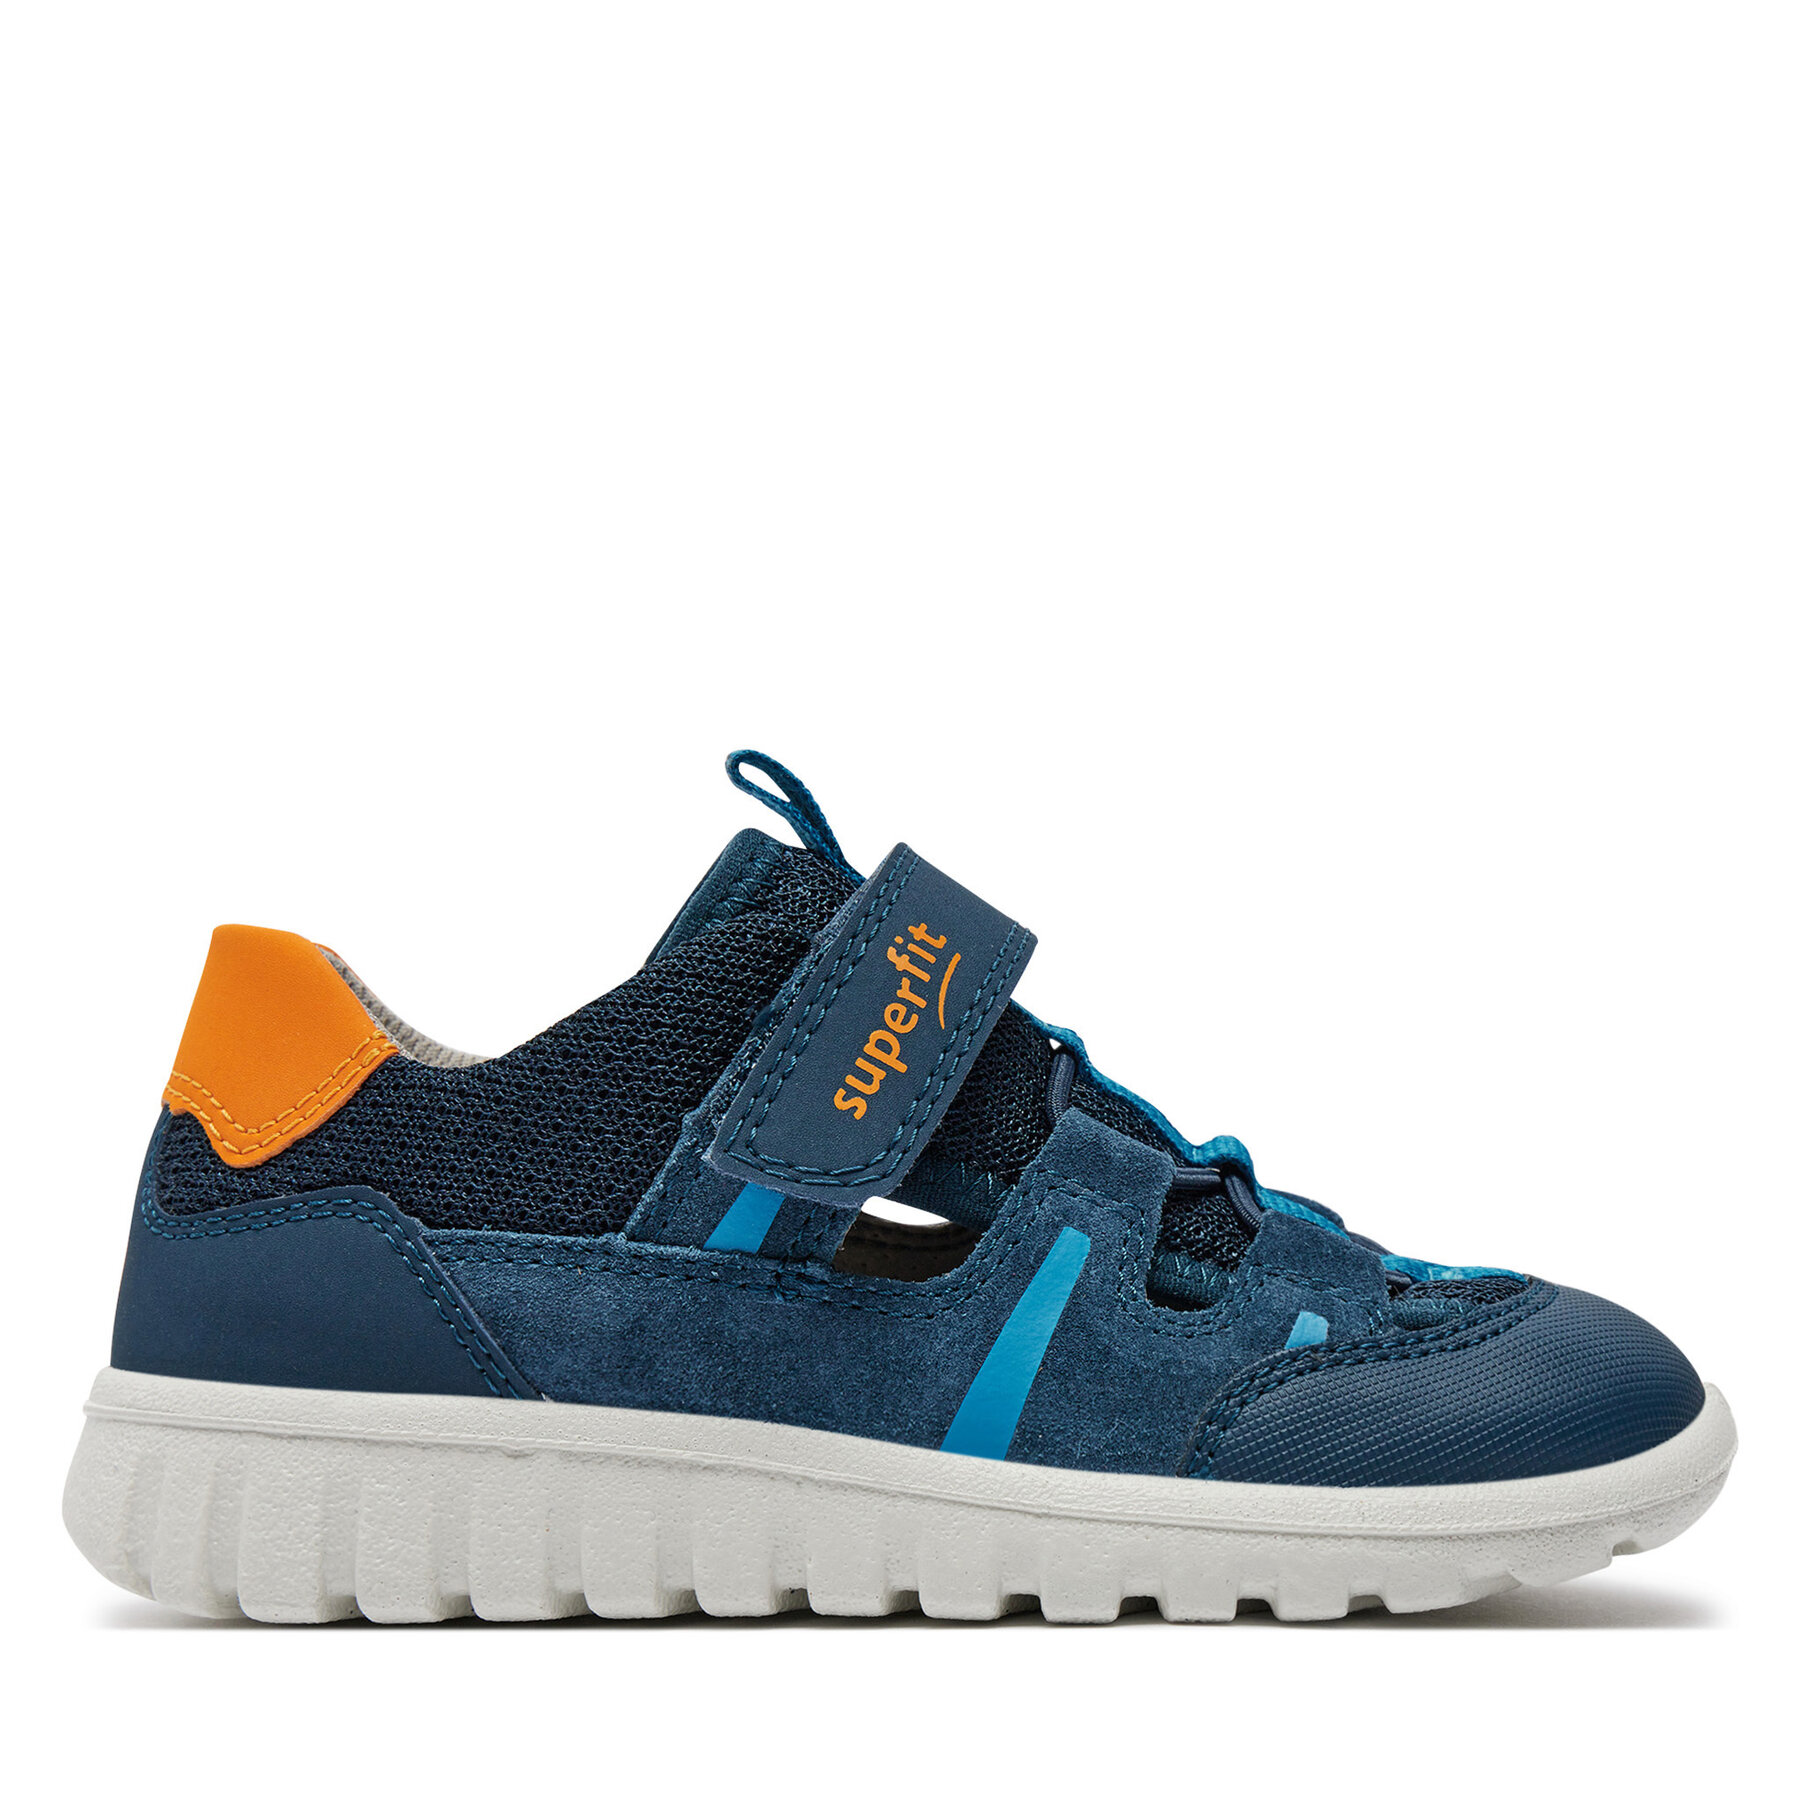 Cipele Superfit 1-006181-8000 S Blue/Orange